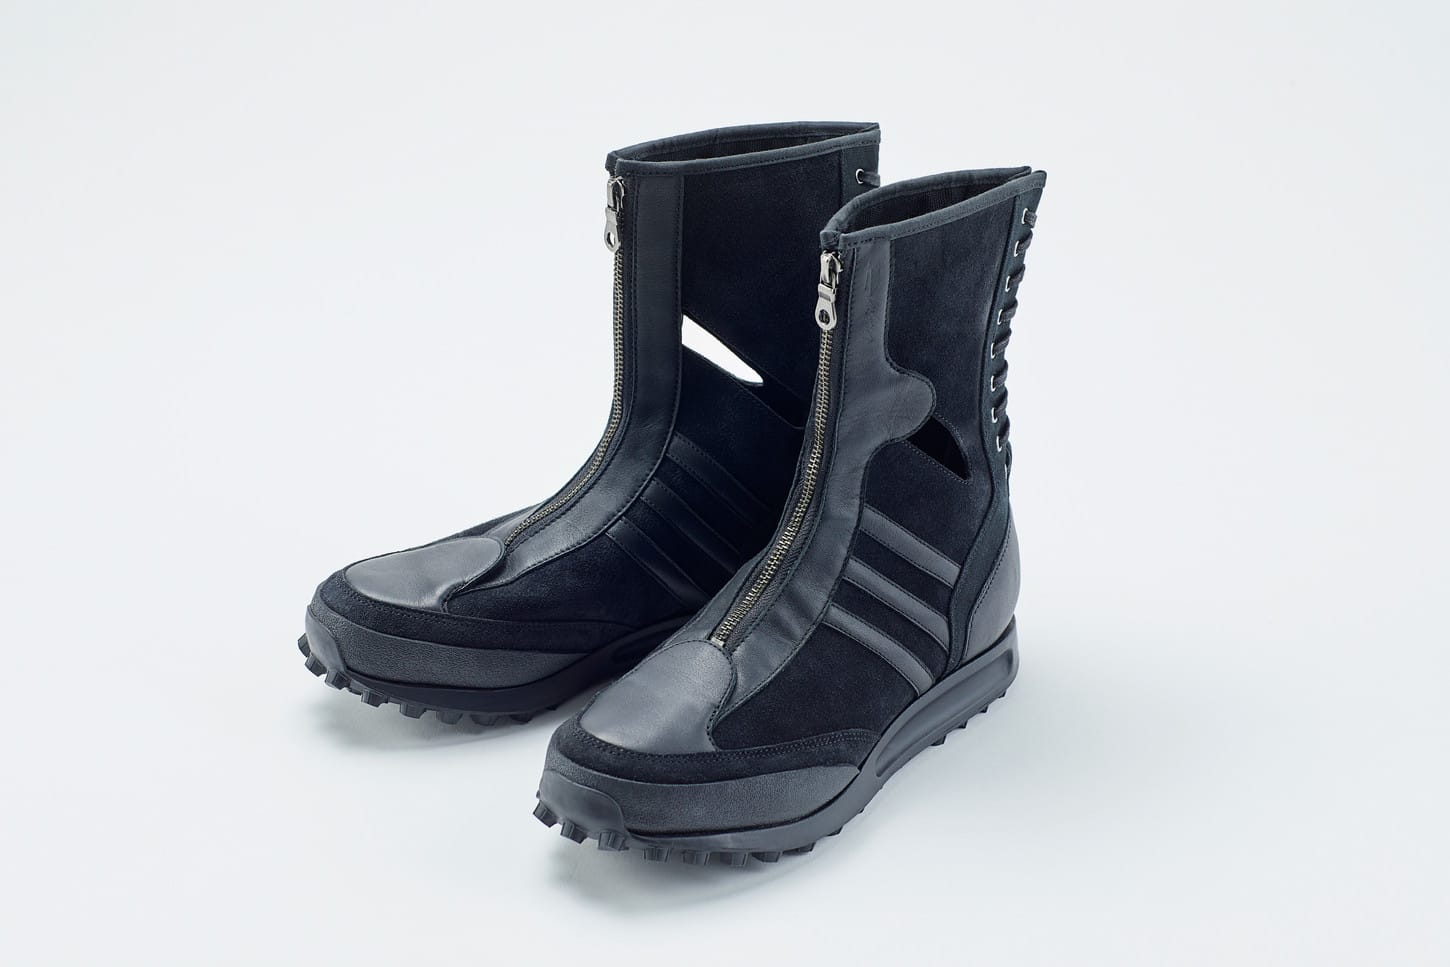 Yohji Yamamoto x adidas Drop Trail Boot 